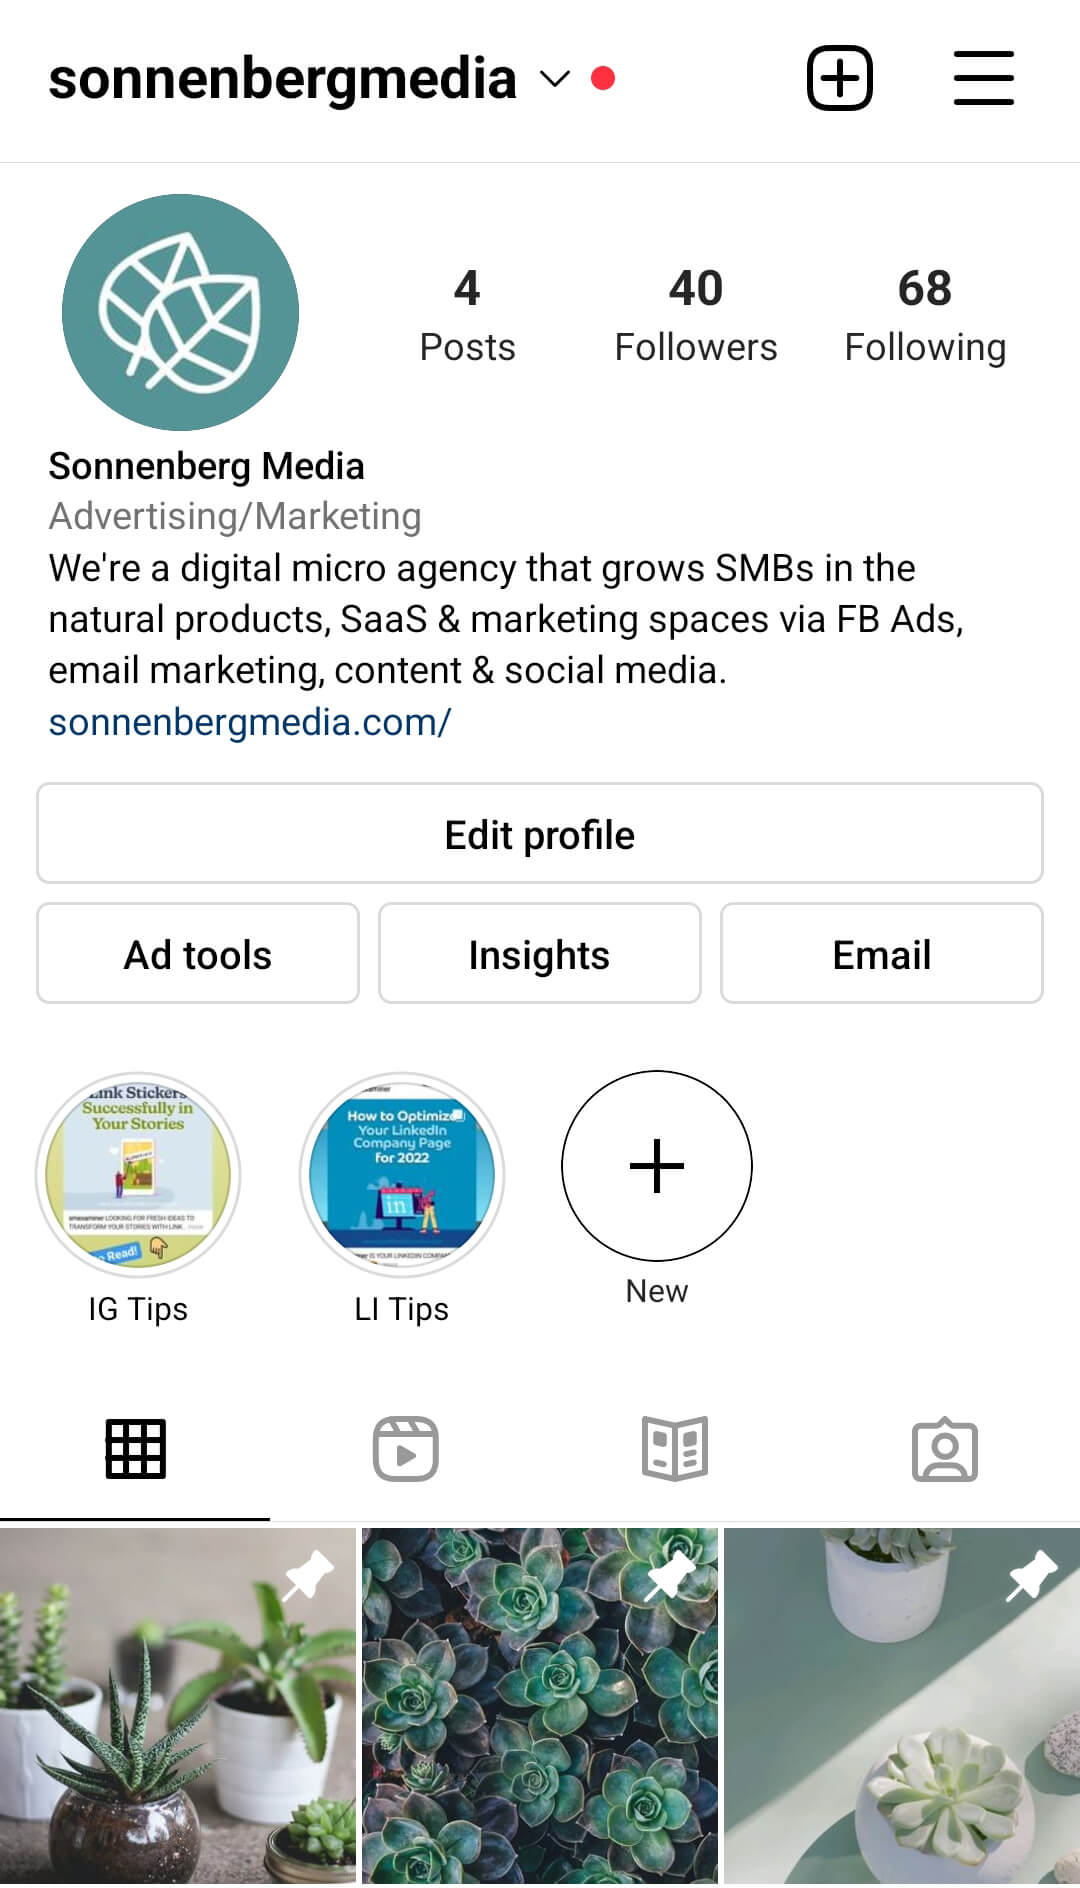 instagram-post-reels-pinning-features-sonnenbergmedia-example-1